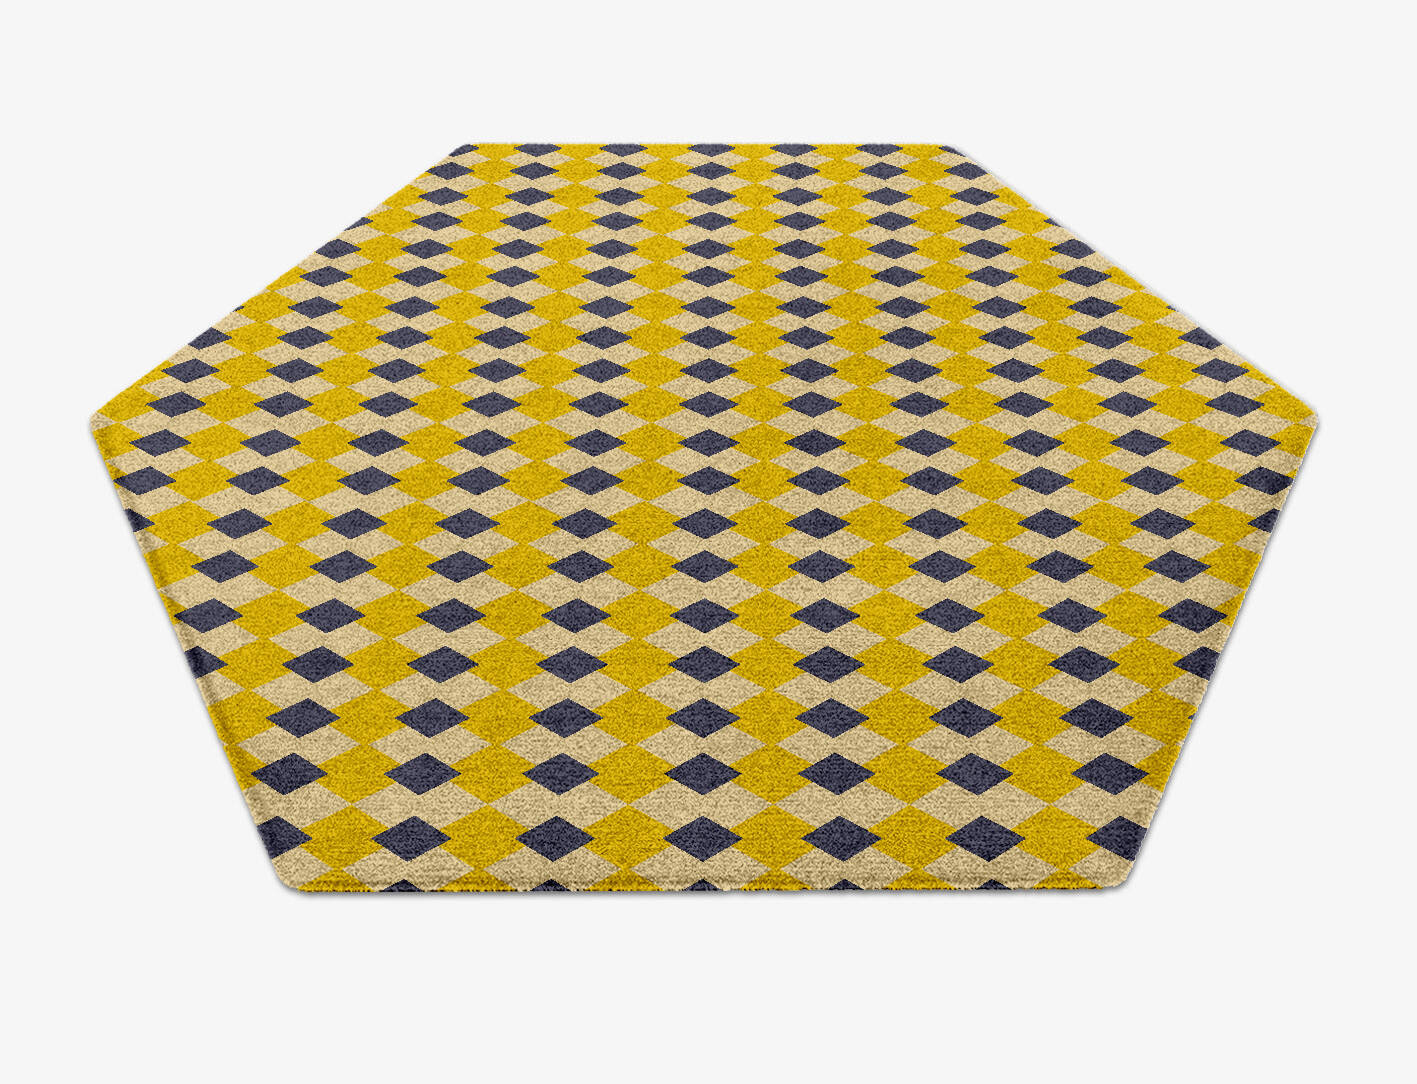 Tinsel Geometric Hexagon Hand Knotted Tibetan Wool Custom Rug by Rug Artisan